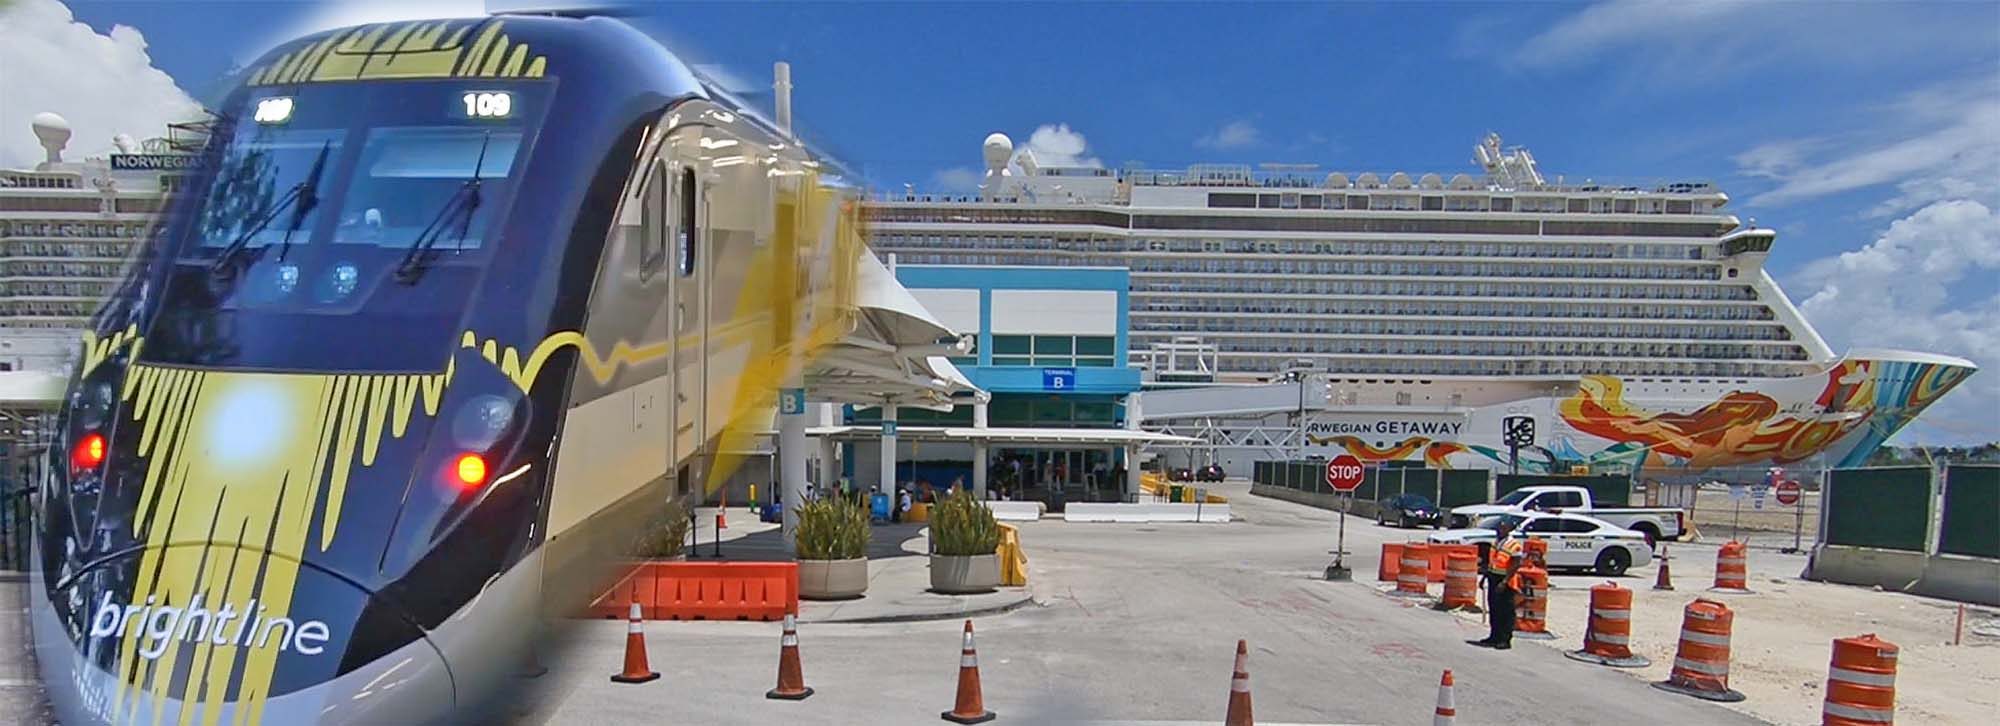 Transportation From Orlando To Miami Cruise Terminal Transport